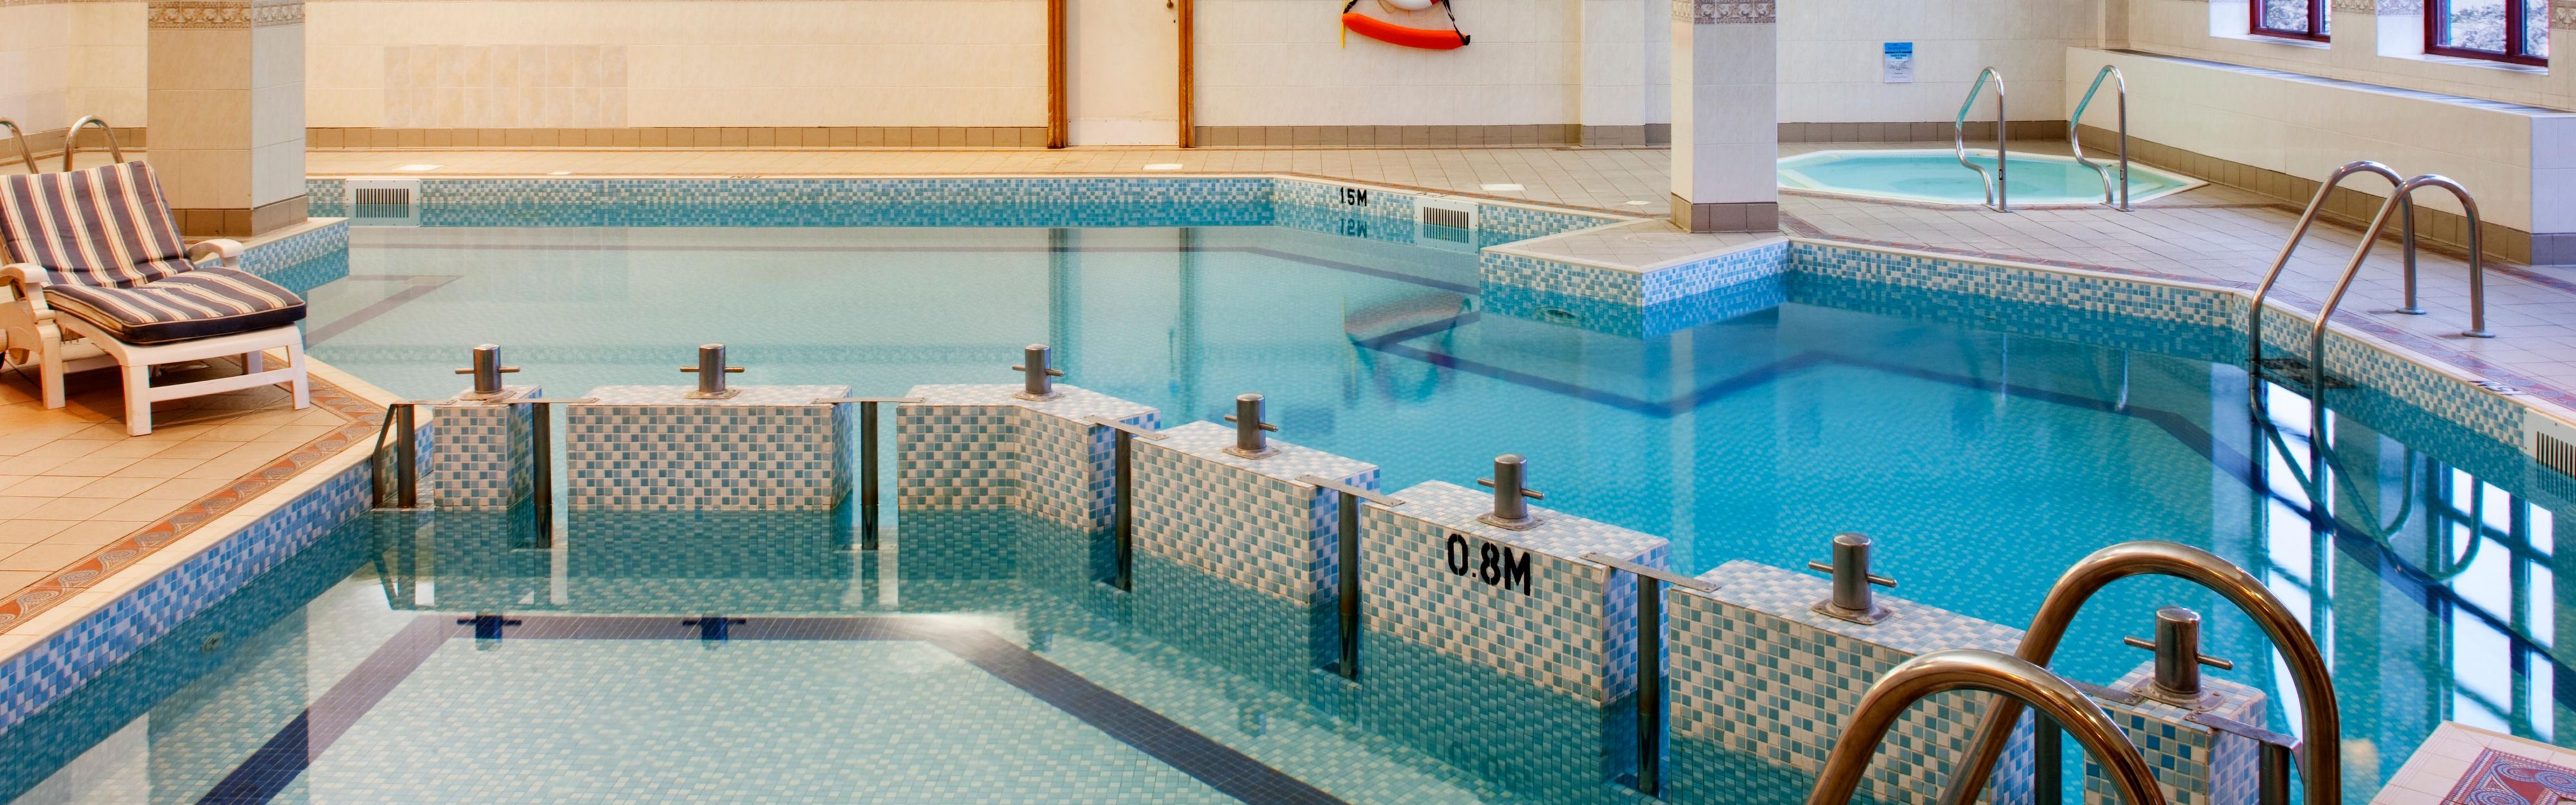 Swimming Pool Holiday Inn Solihull